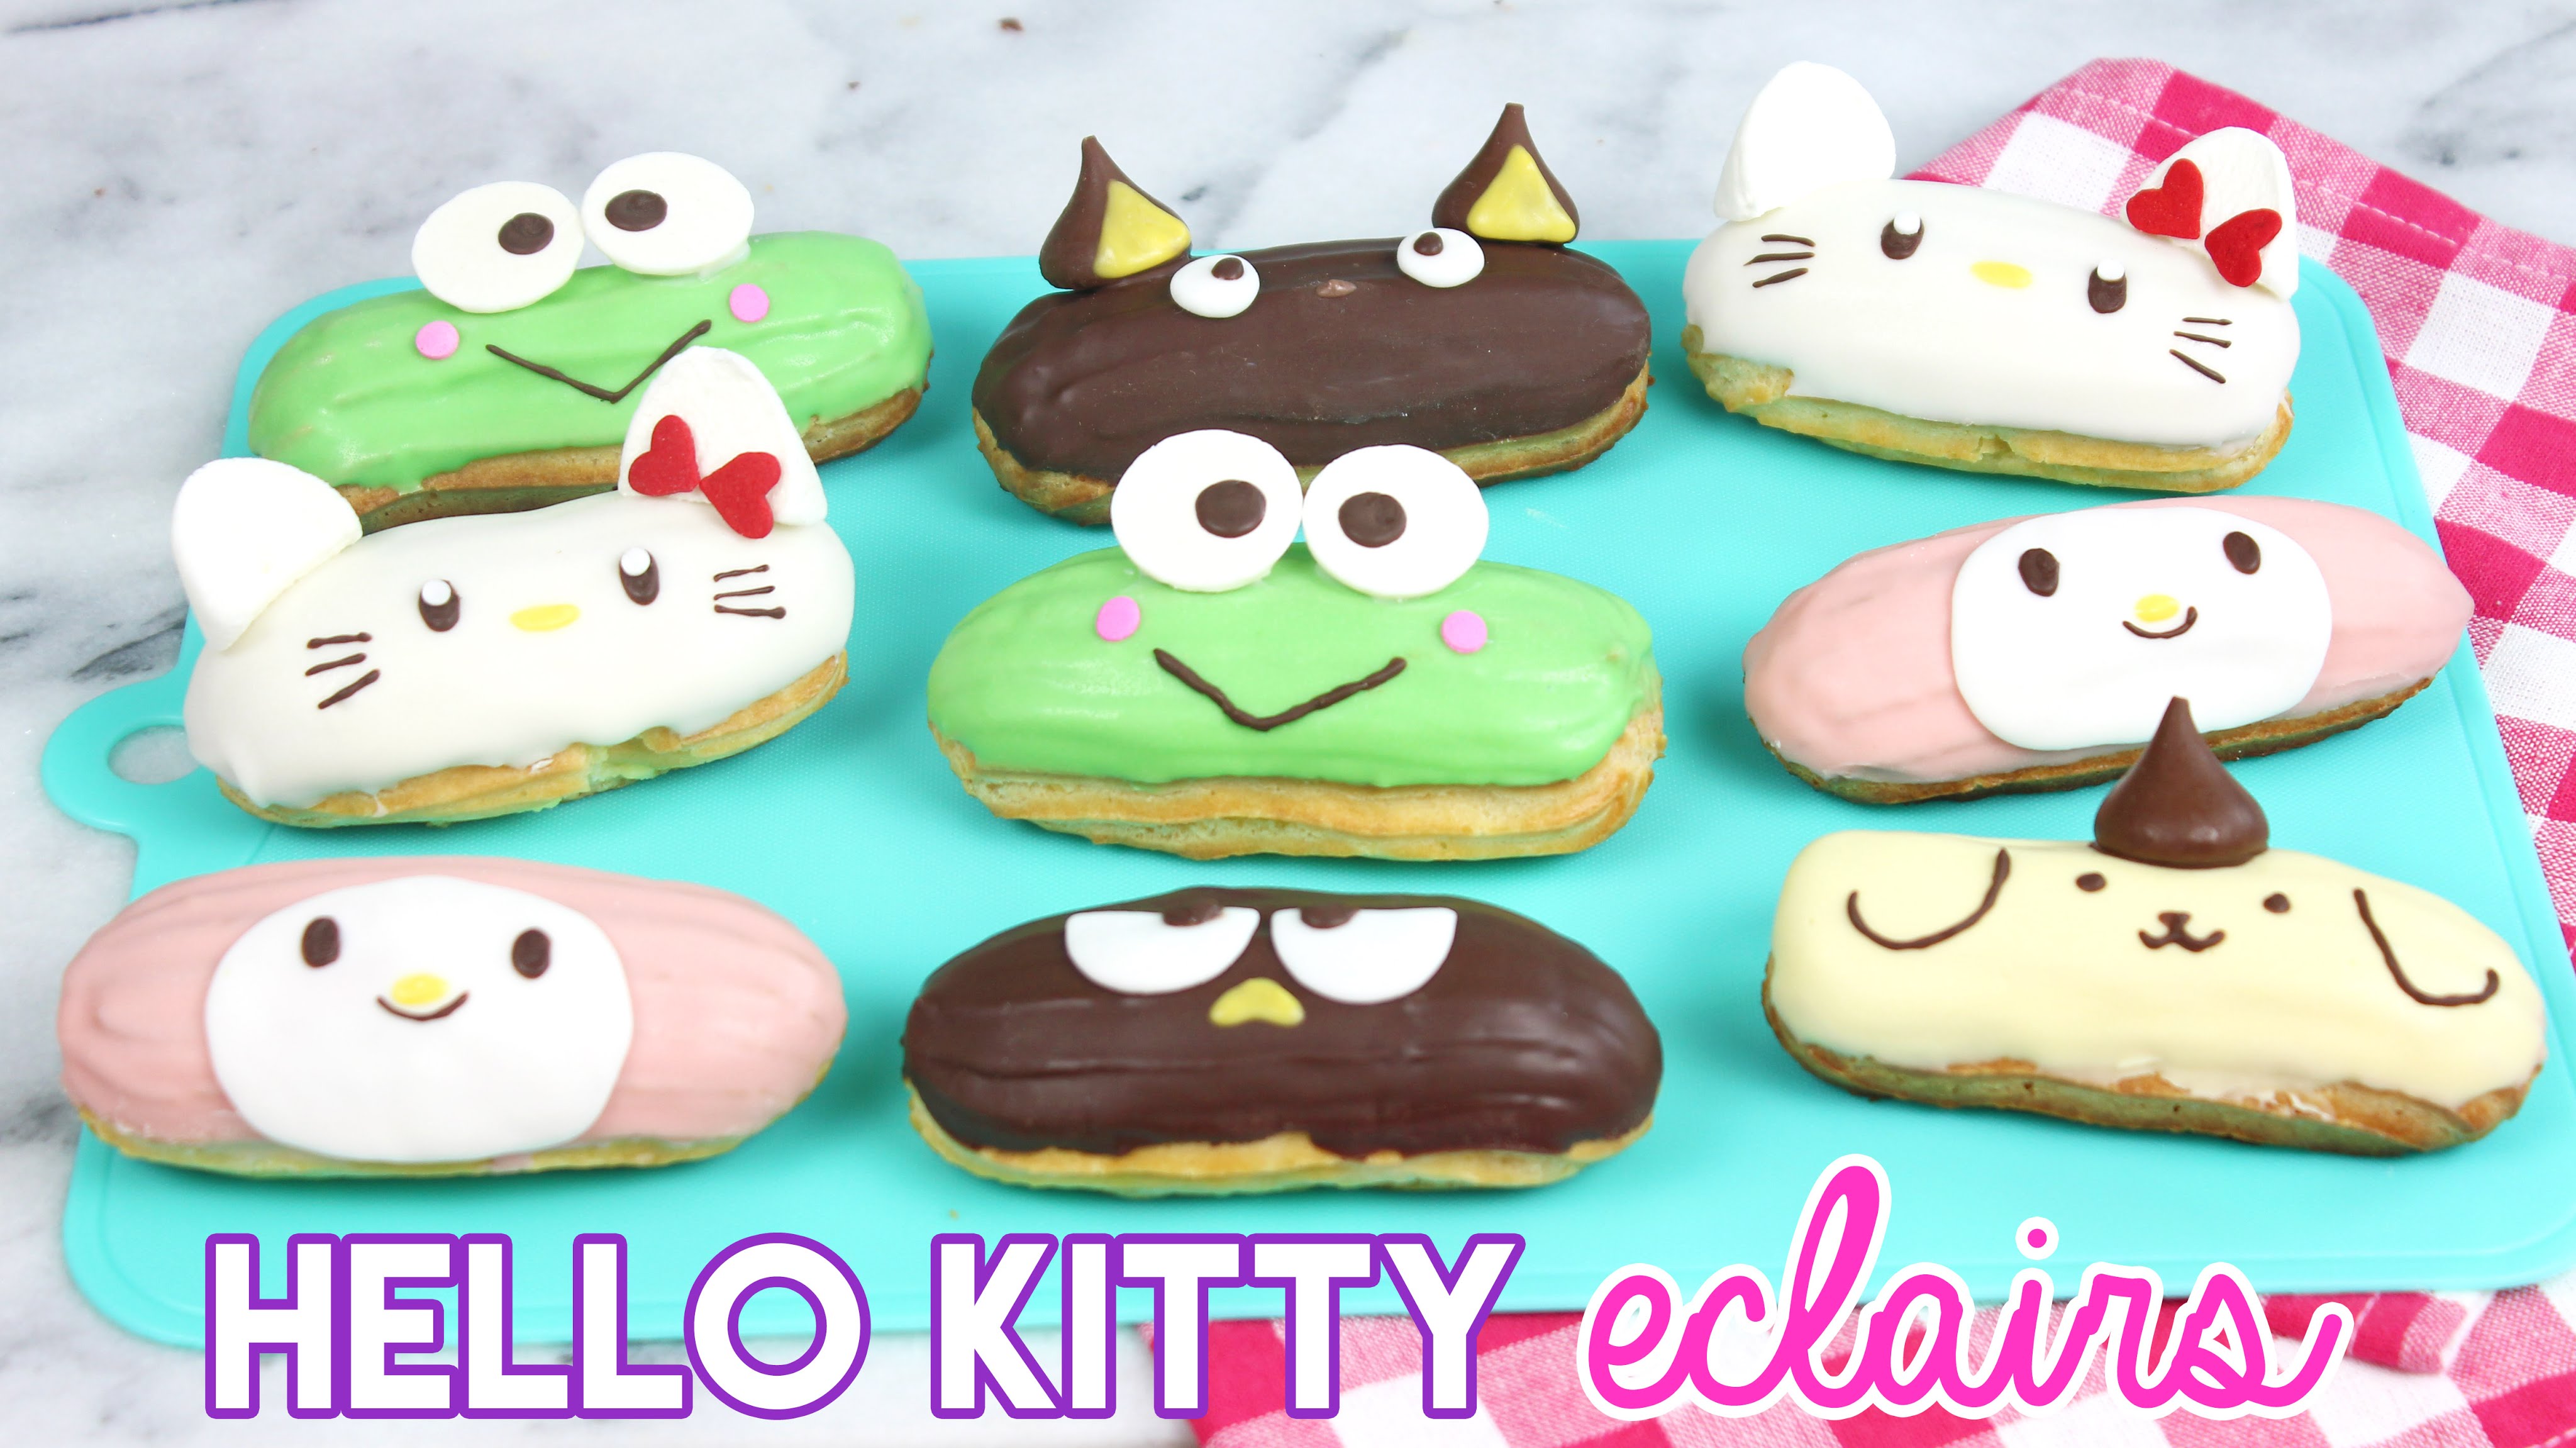 How to Make Hello Kitty Eclairs! - YouTube